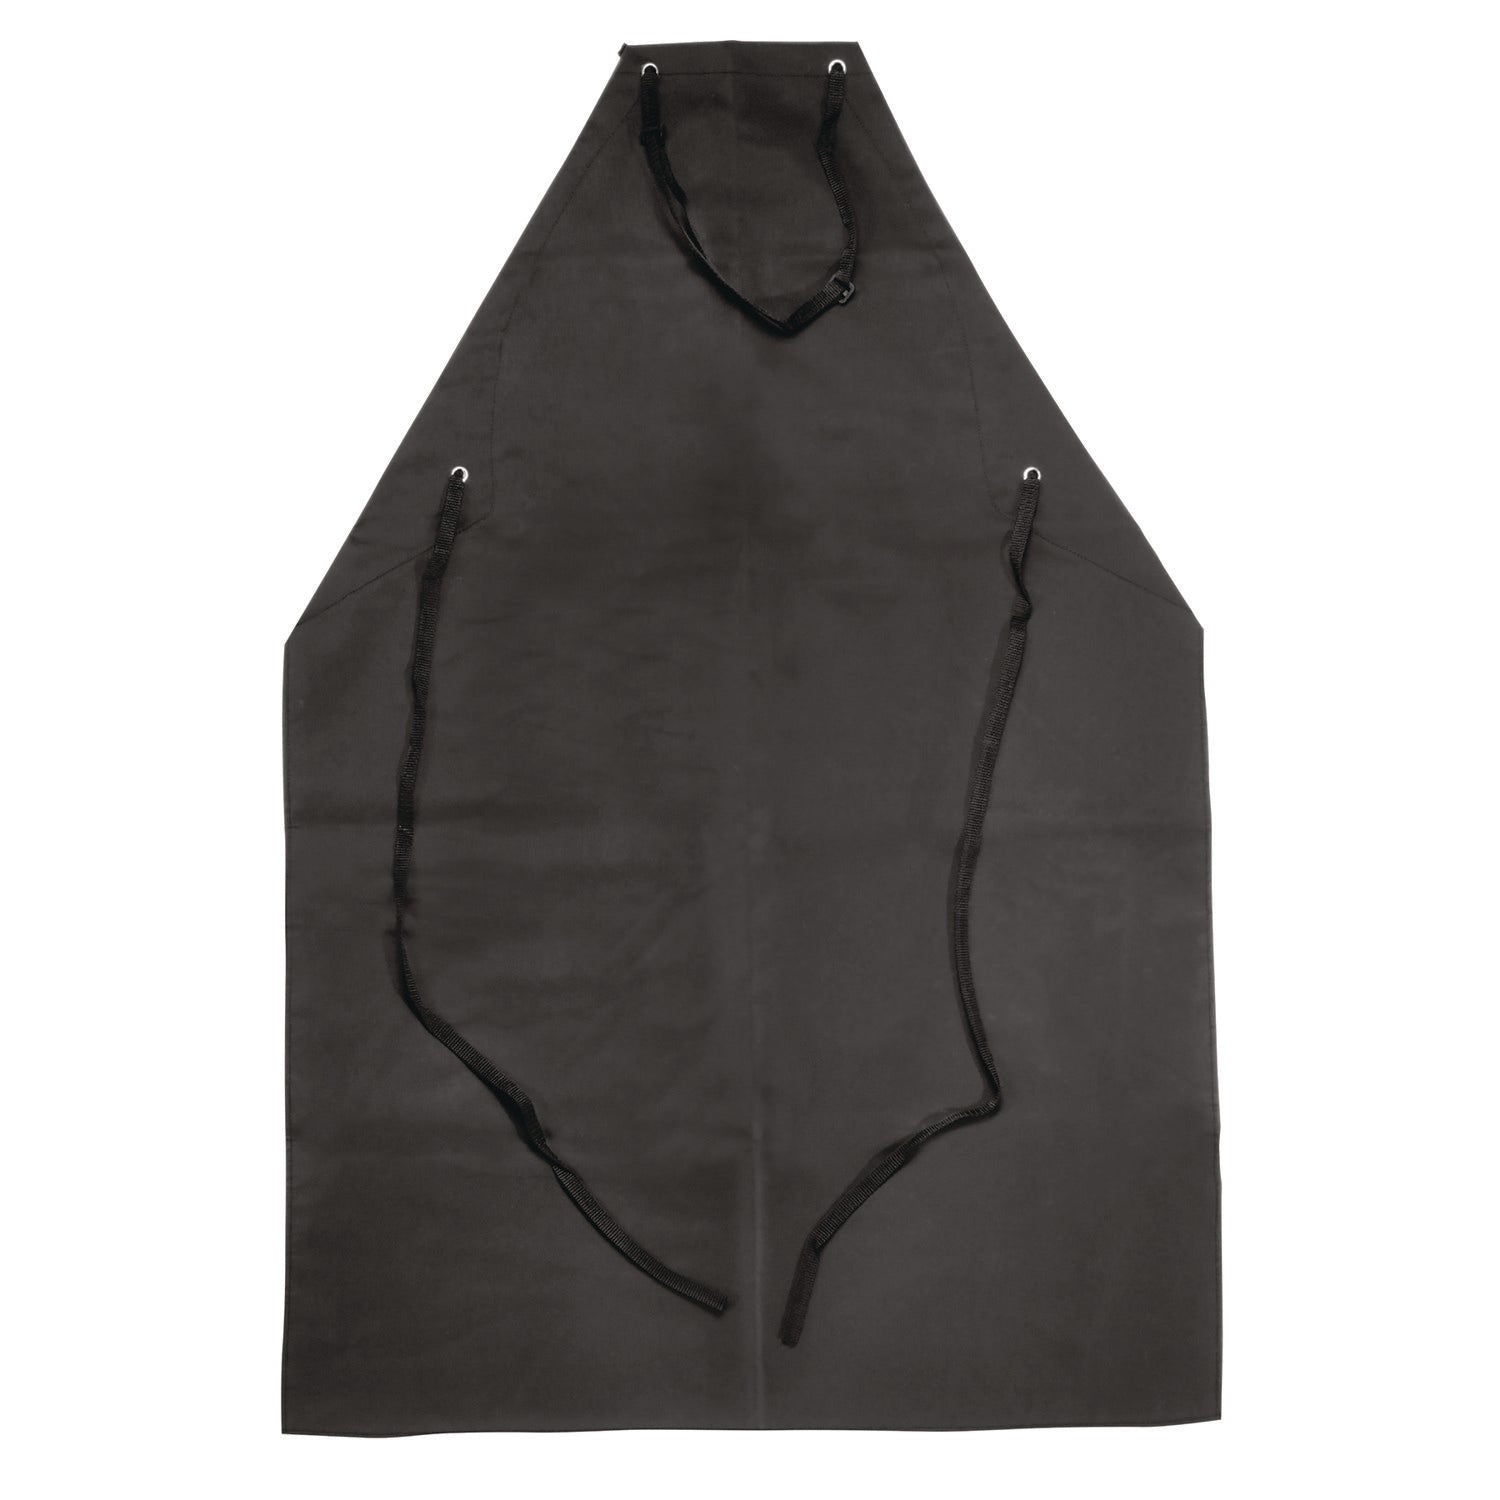 neoflex-apron-one-size-fits-all-black_sjm615nbabk - 1